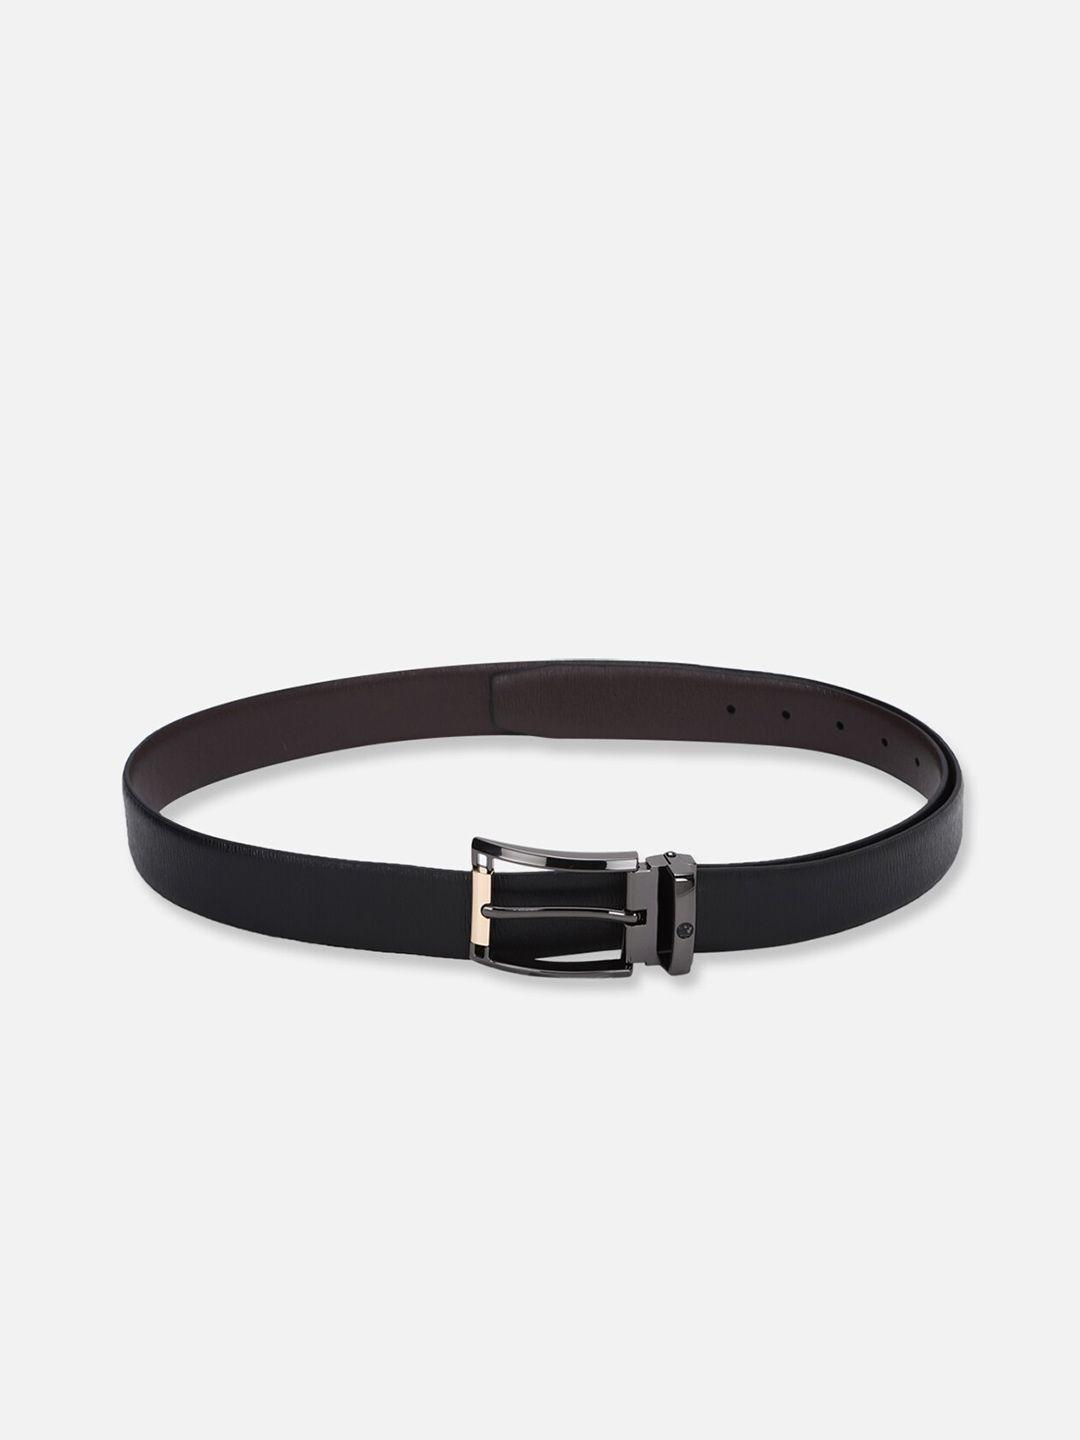 louis philippe men black leather belt